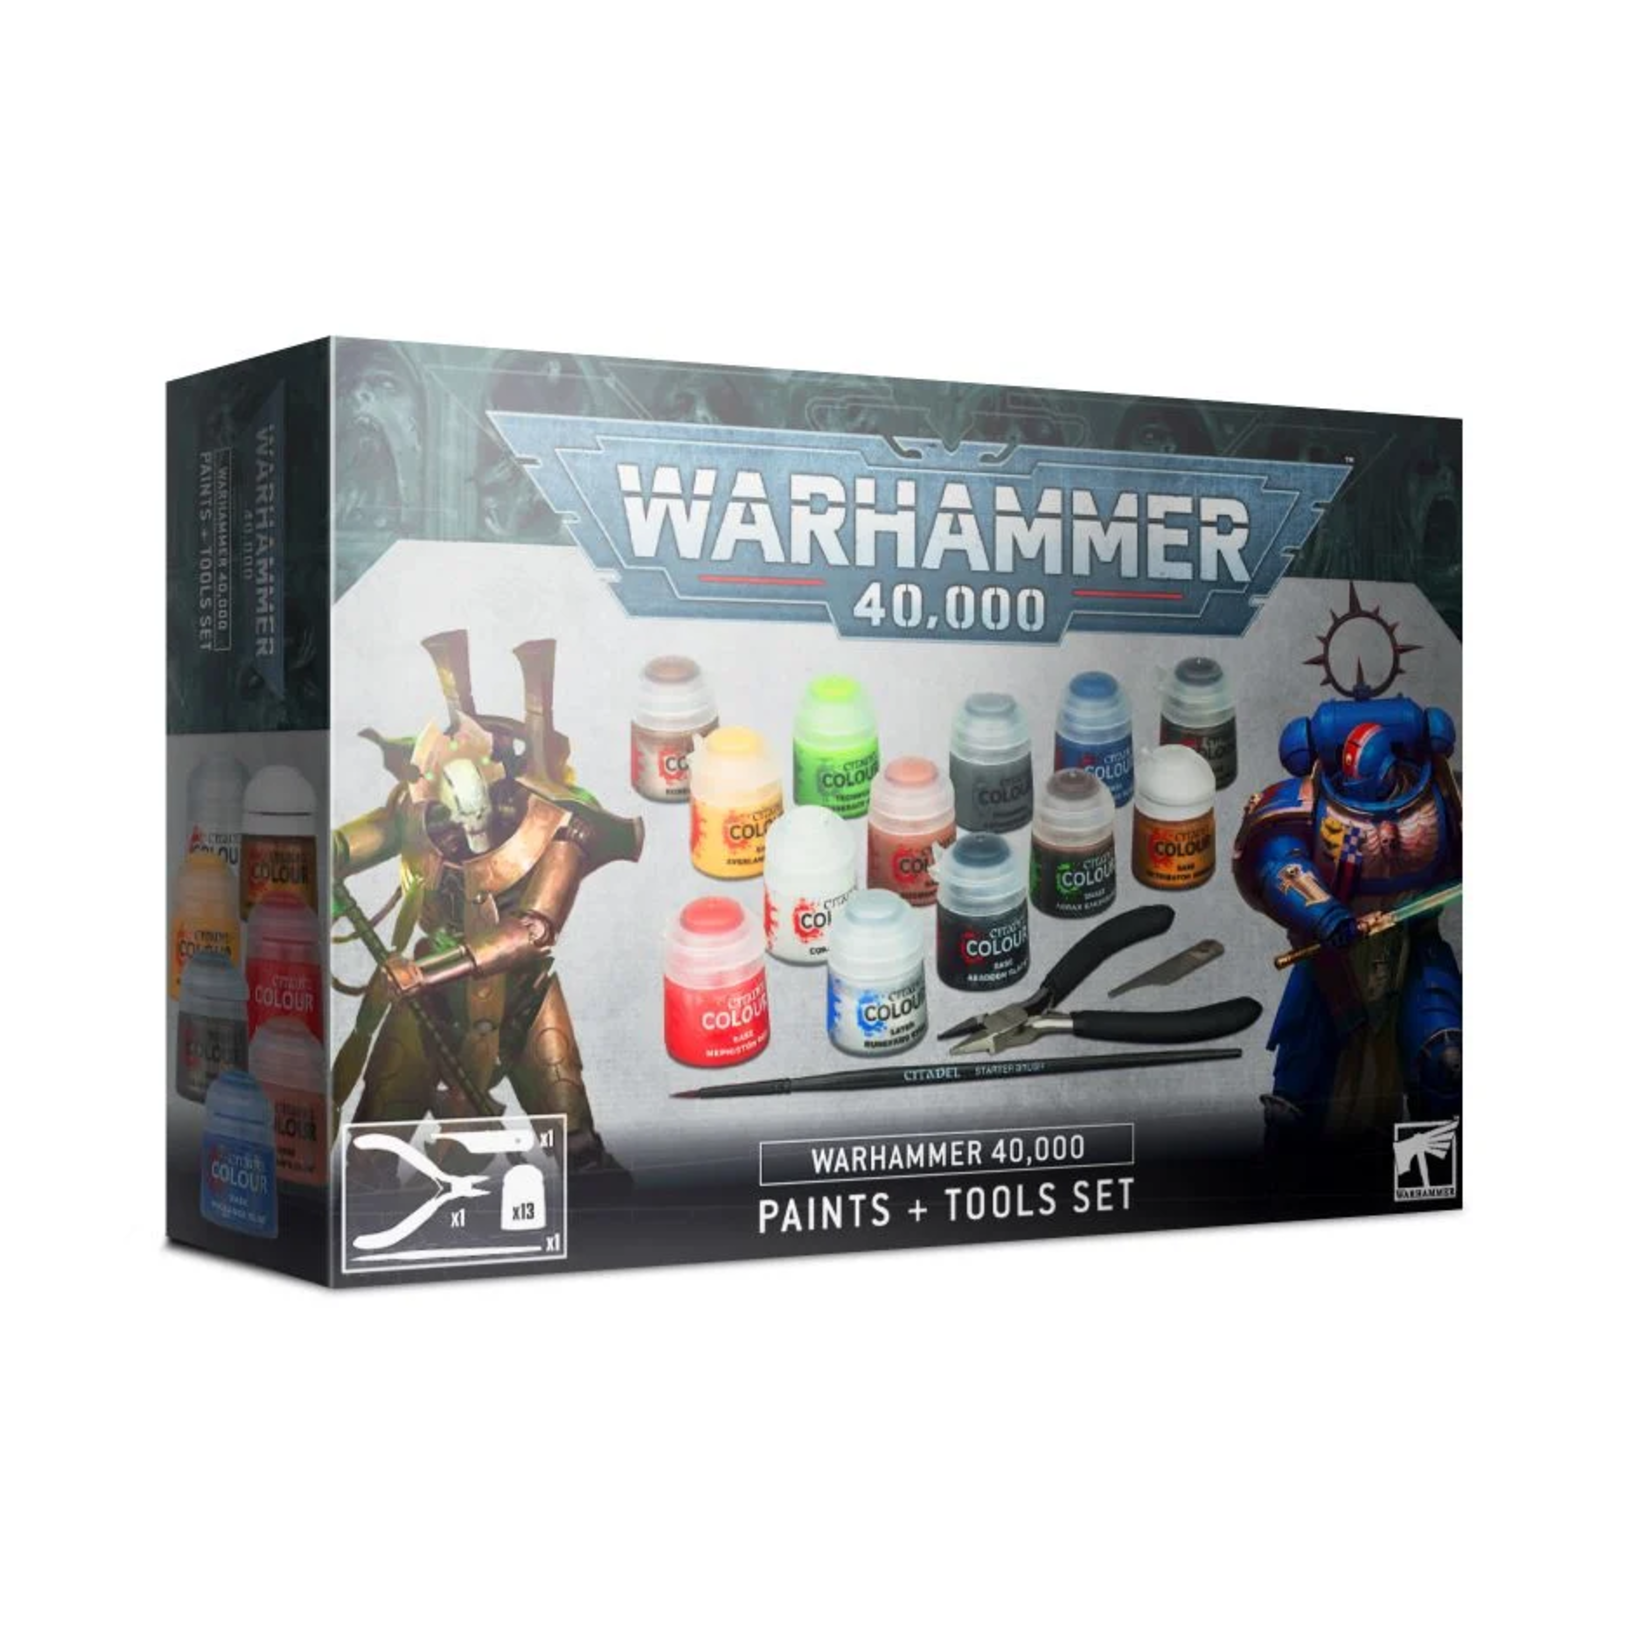 Paint Set: Warhammer 40,000 - Paints + Tools